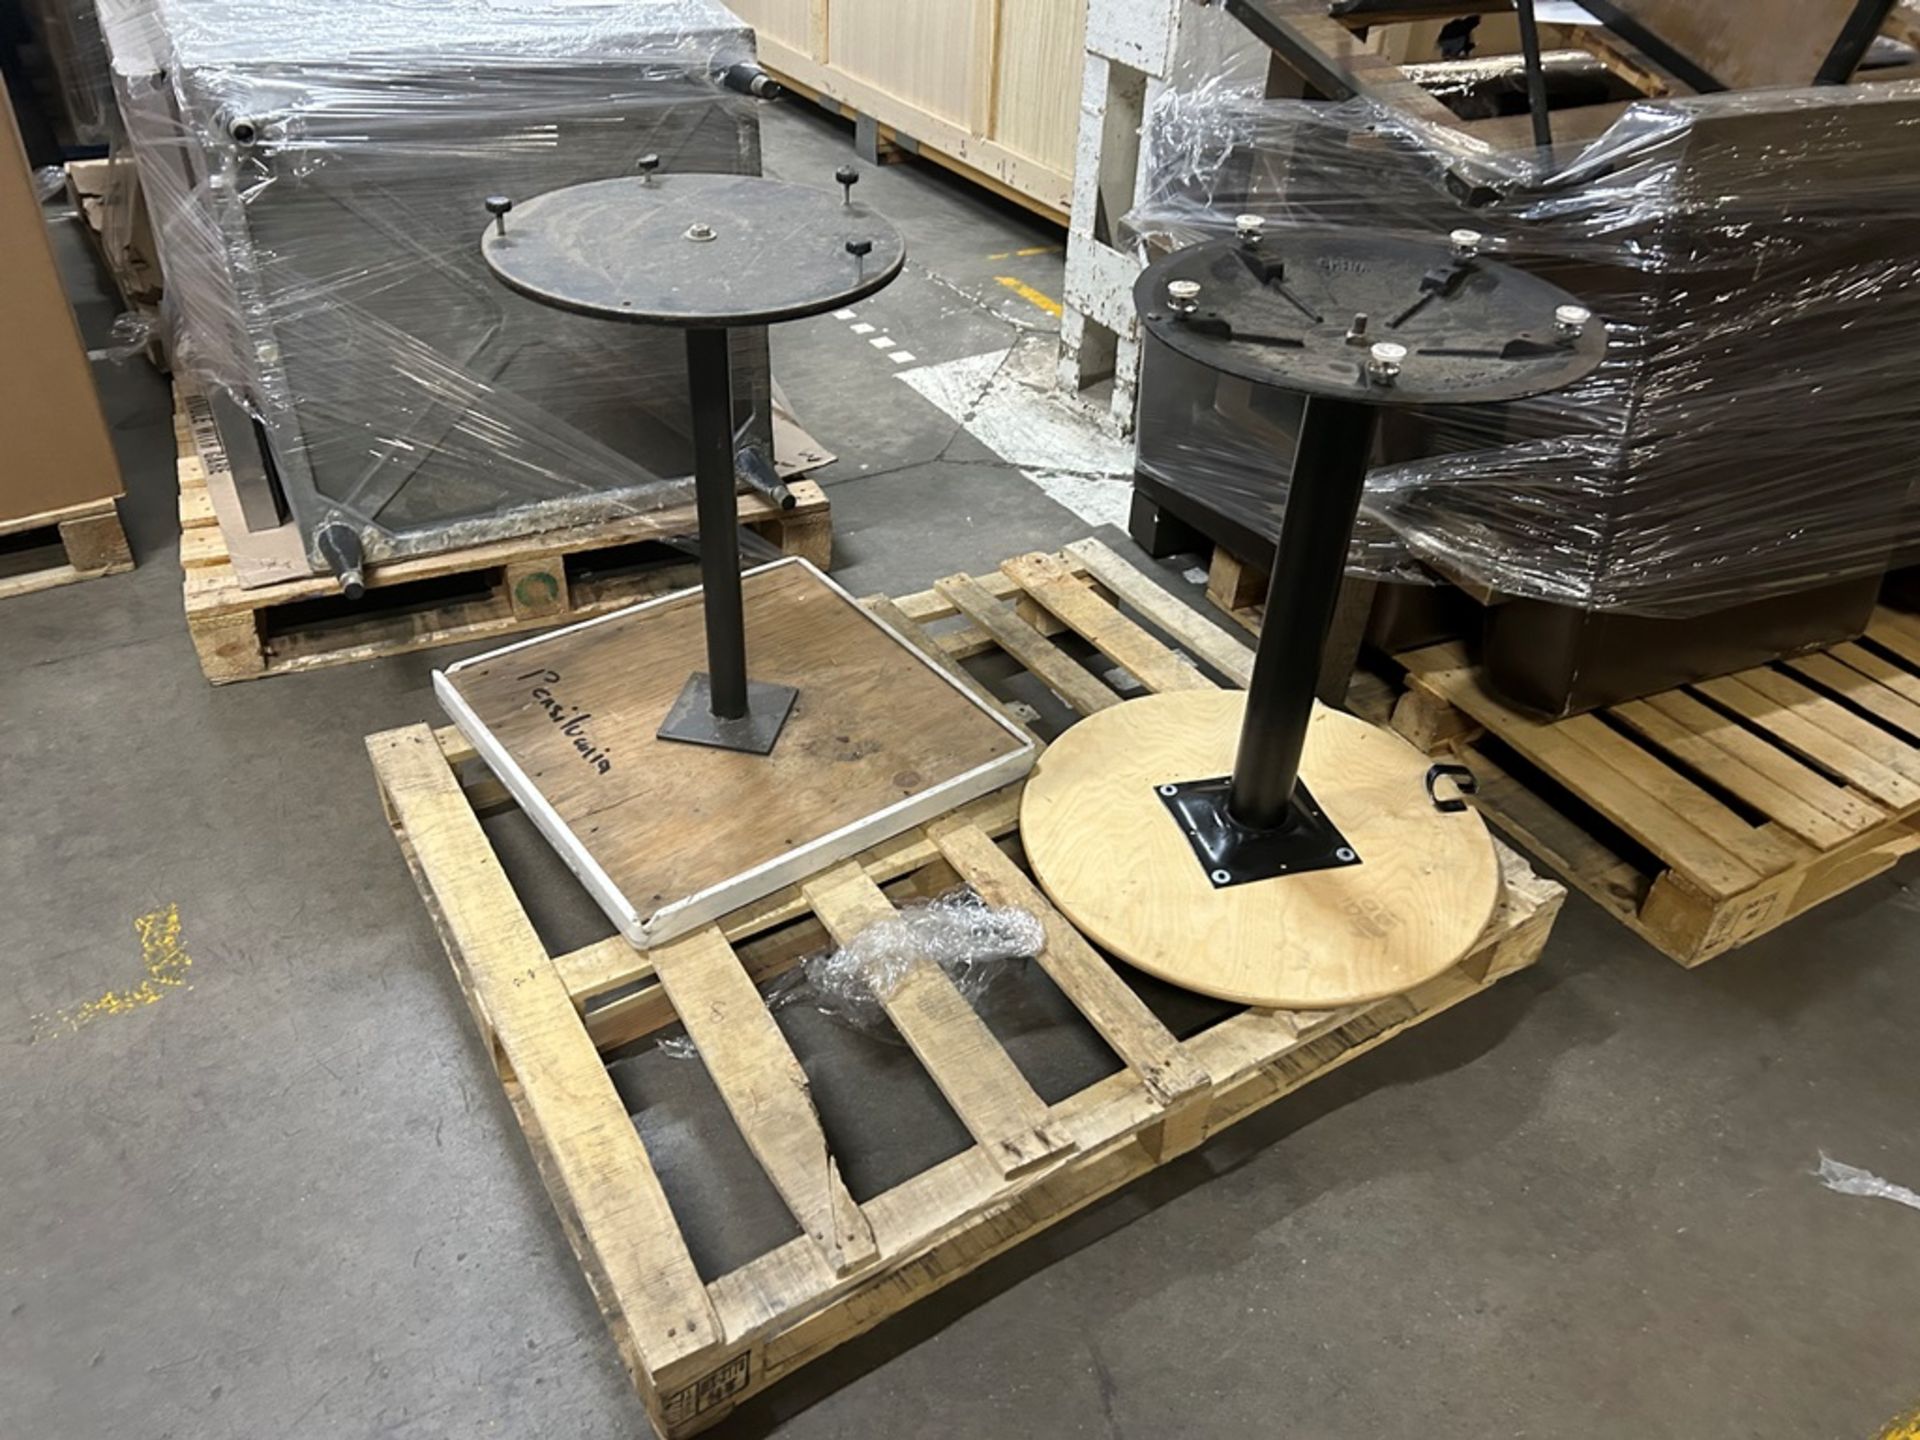 Lote de 4 mesas; 2 mesas redondas de madera con base de metal color BLANCO, Medidas 60cm de diámetr - Image 3 of 4